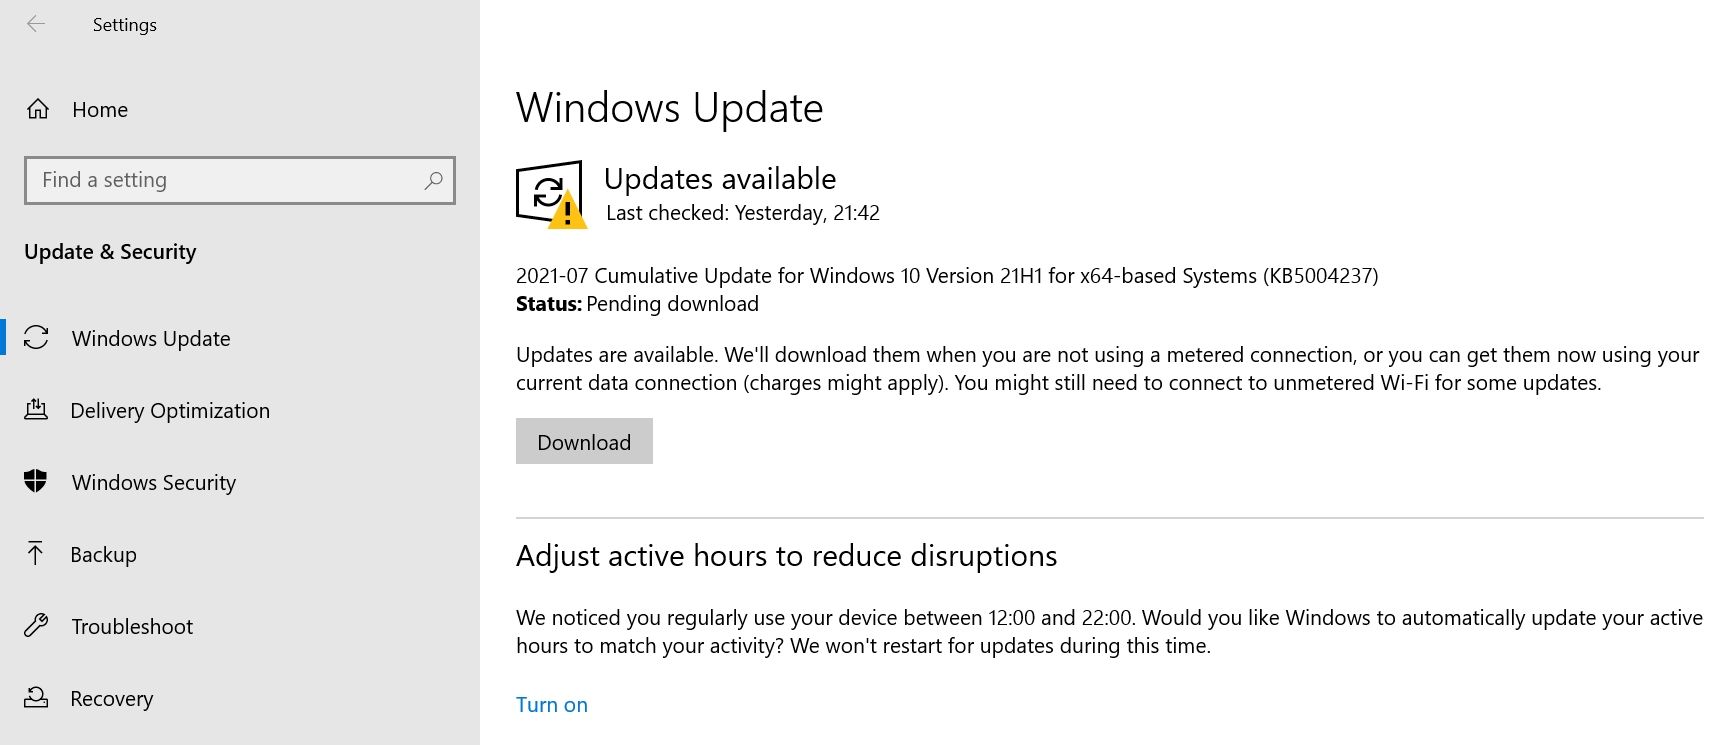 Windows Update screen in the Settings.